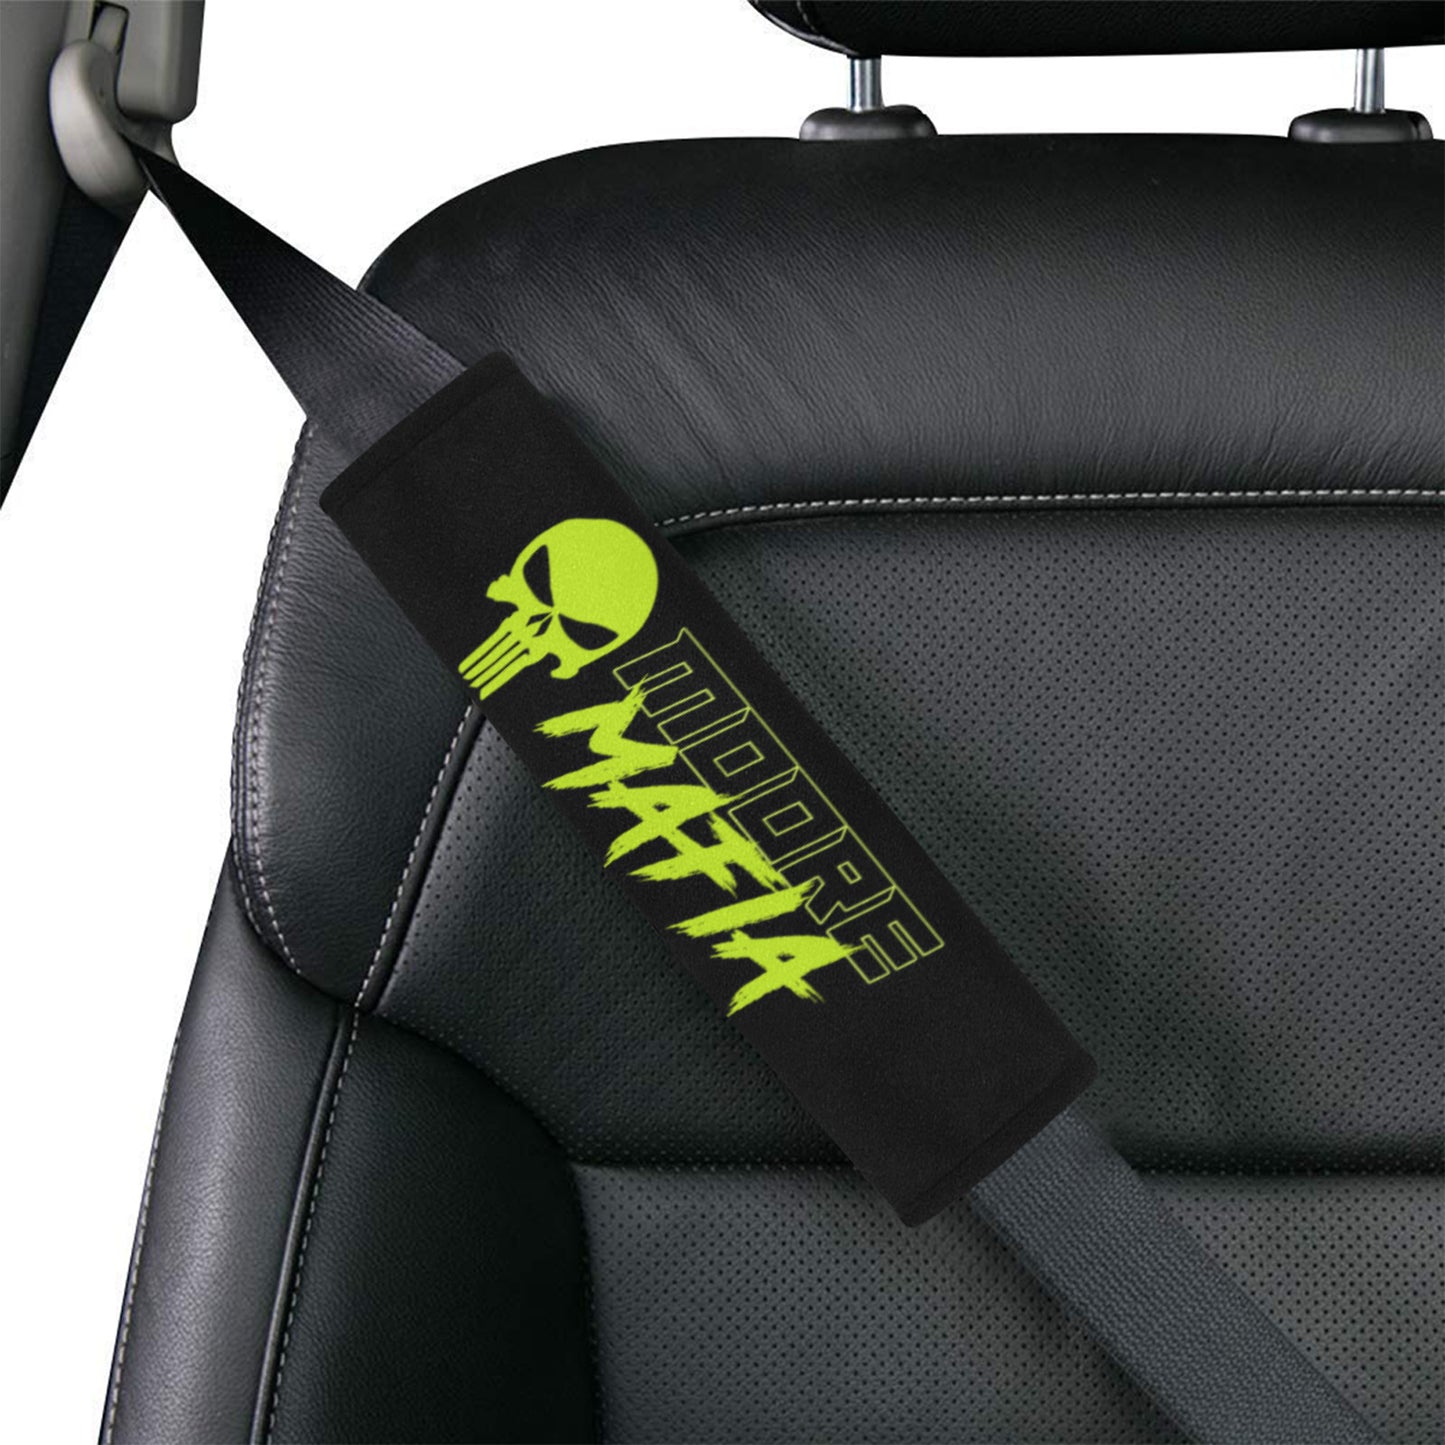 Moore Mafia Seat Belt Cover Car Seat Belt Cover 7''x10'' (Pack of 2)